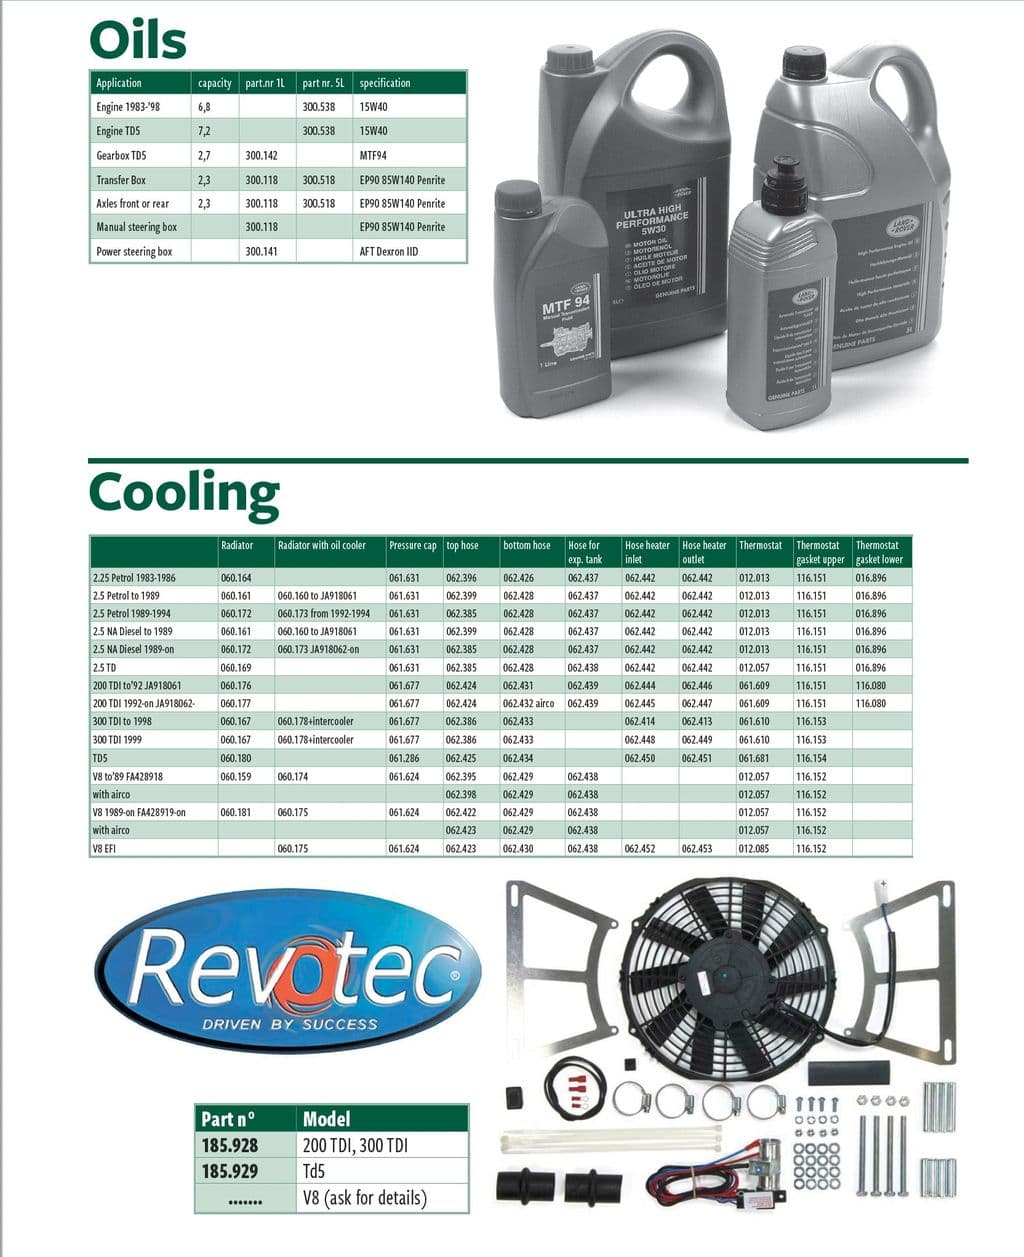 Oils & cooling - Engine amélioration refroidissement - Refroidissement - Land Rover Defender 90-110 1984-2006 - Oils & cooling - 1